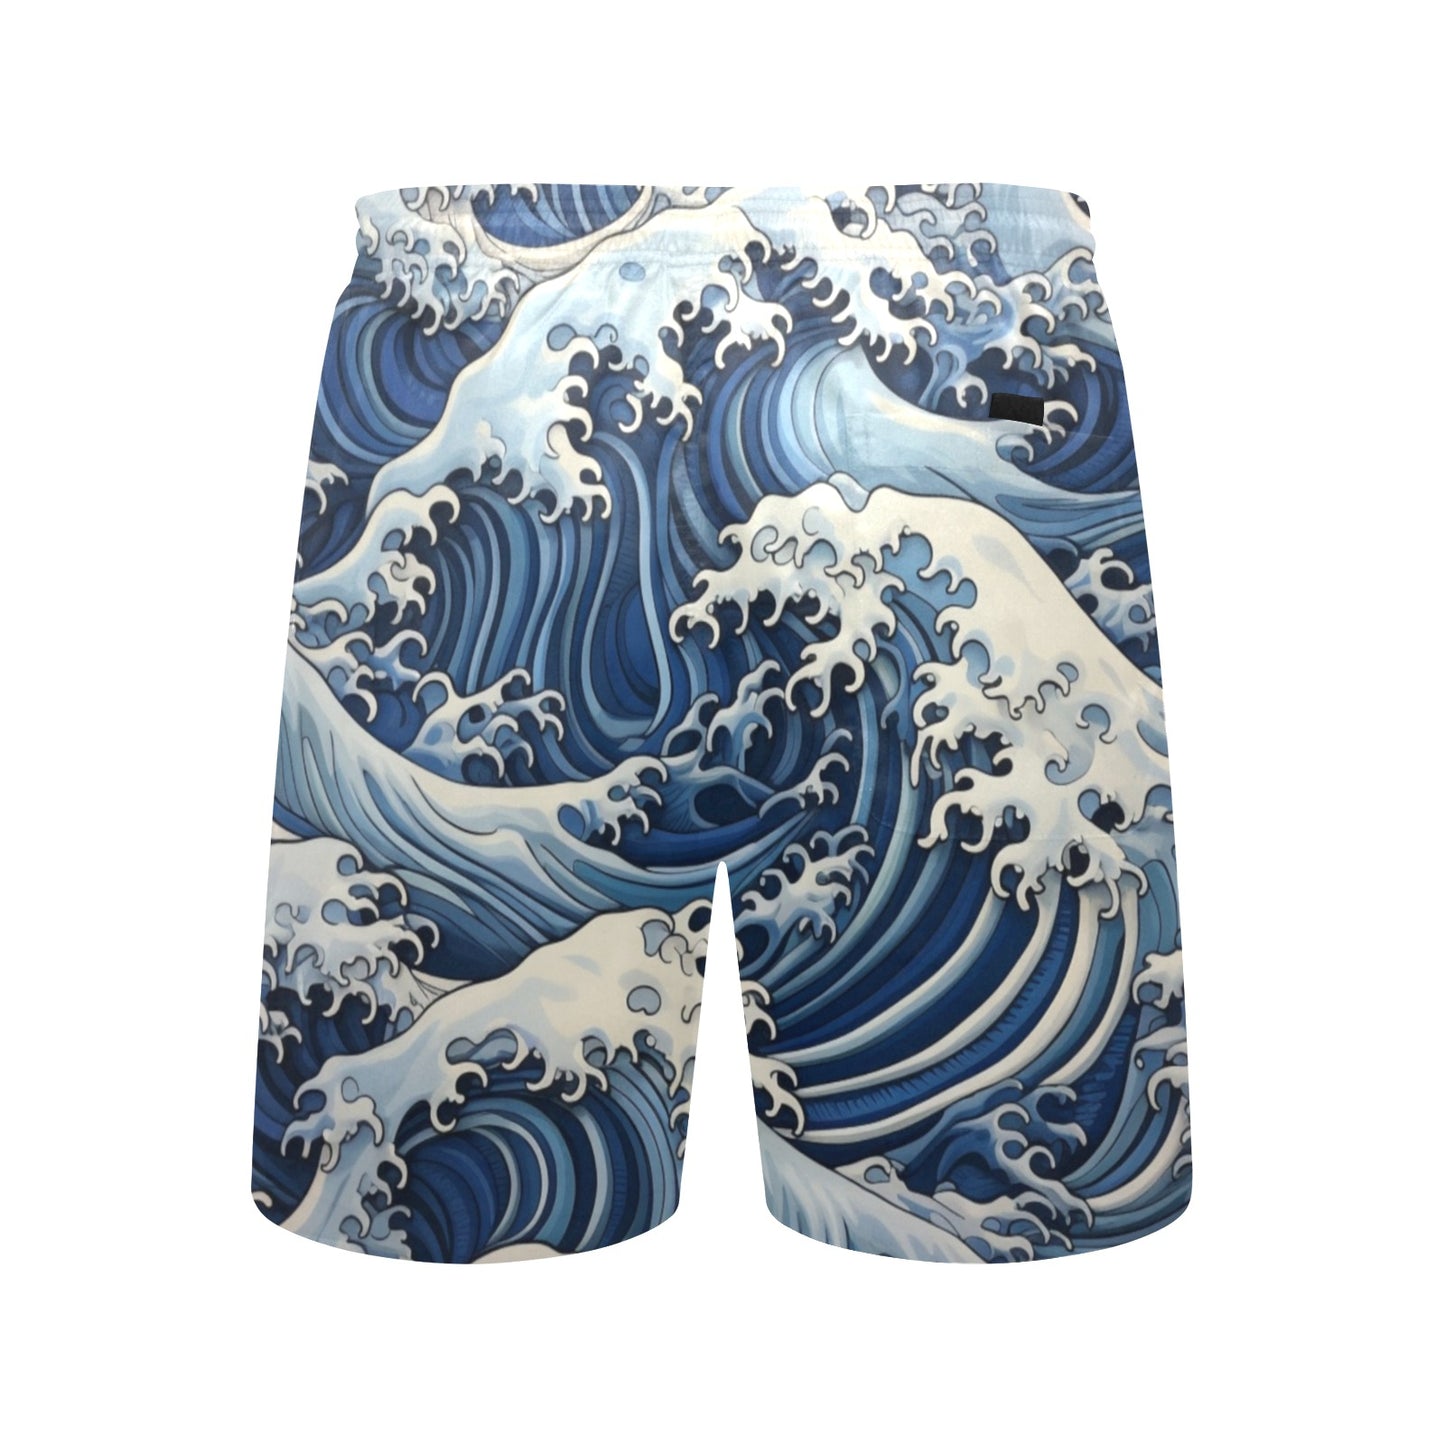 Japanese Waves Men Swim Trunks, Ocean Blue 7" Inseam Shorts Beach Pockets Mesh Lining Drawstring Casual Bathing Suit Plus Size Swimwear